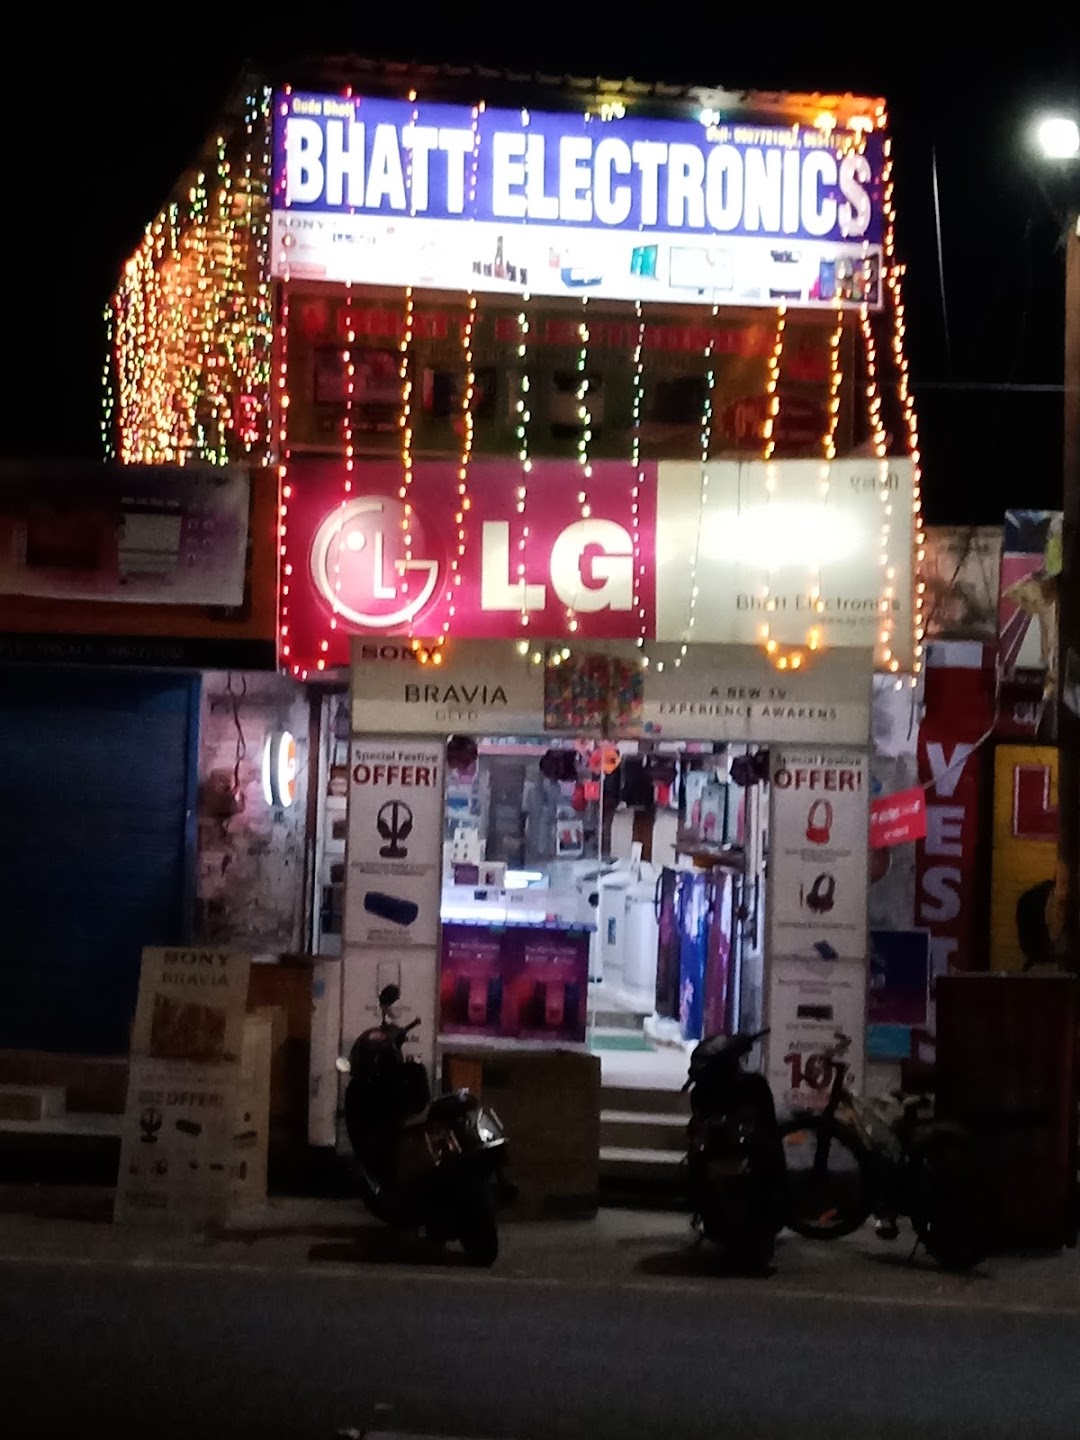 Bhatt Electronics